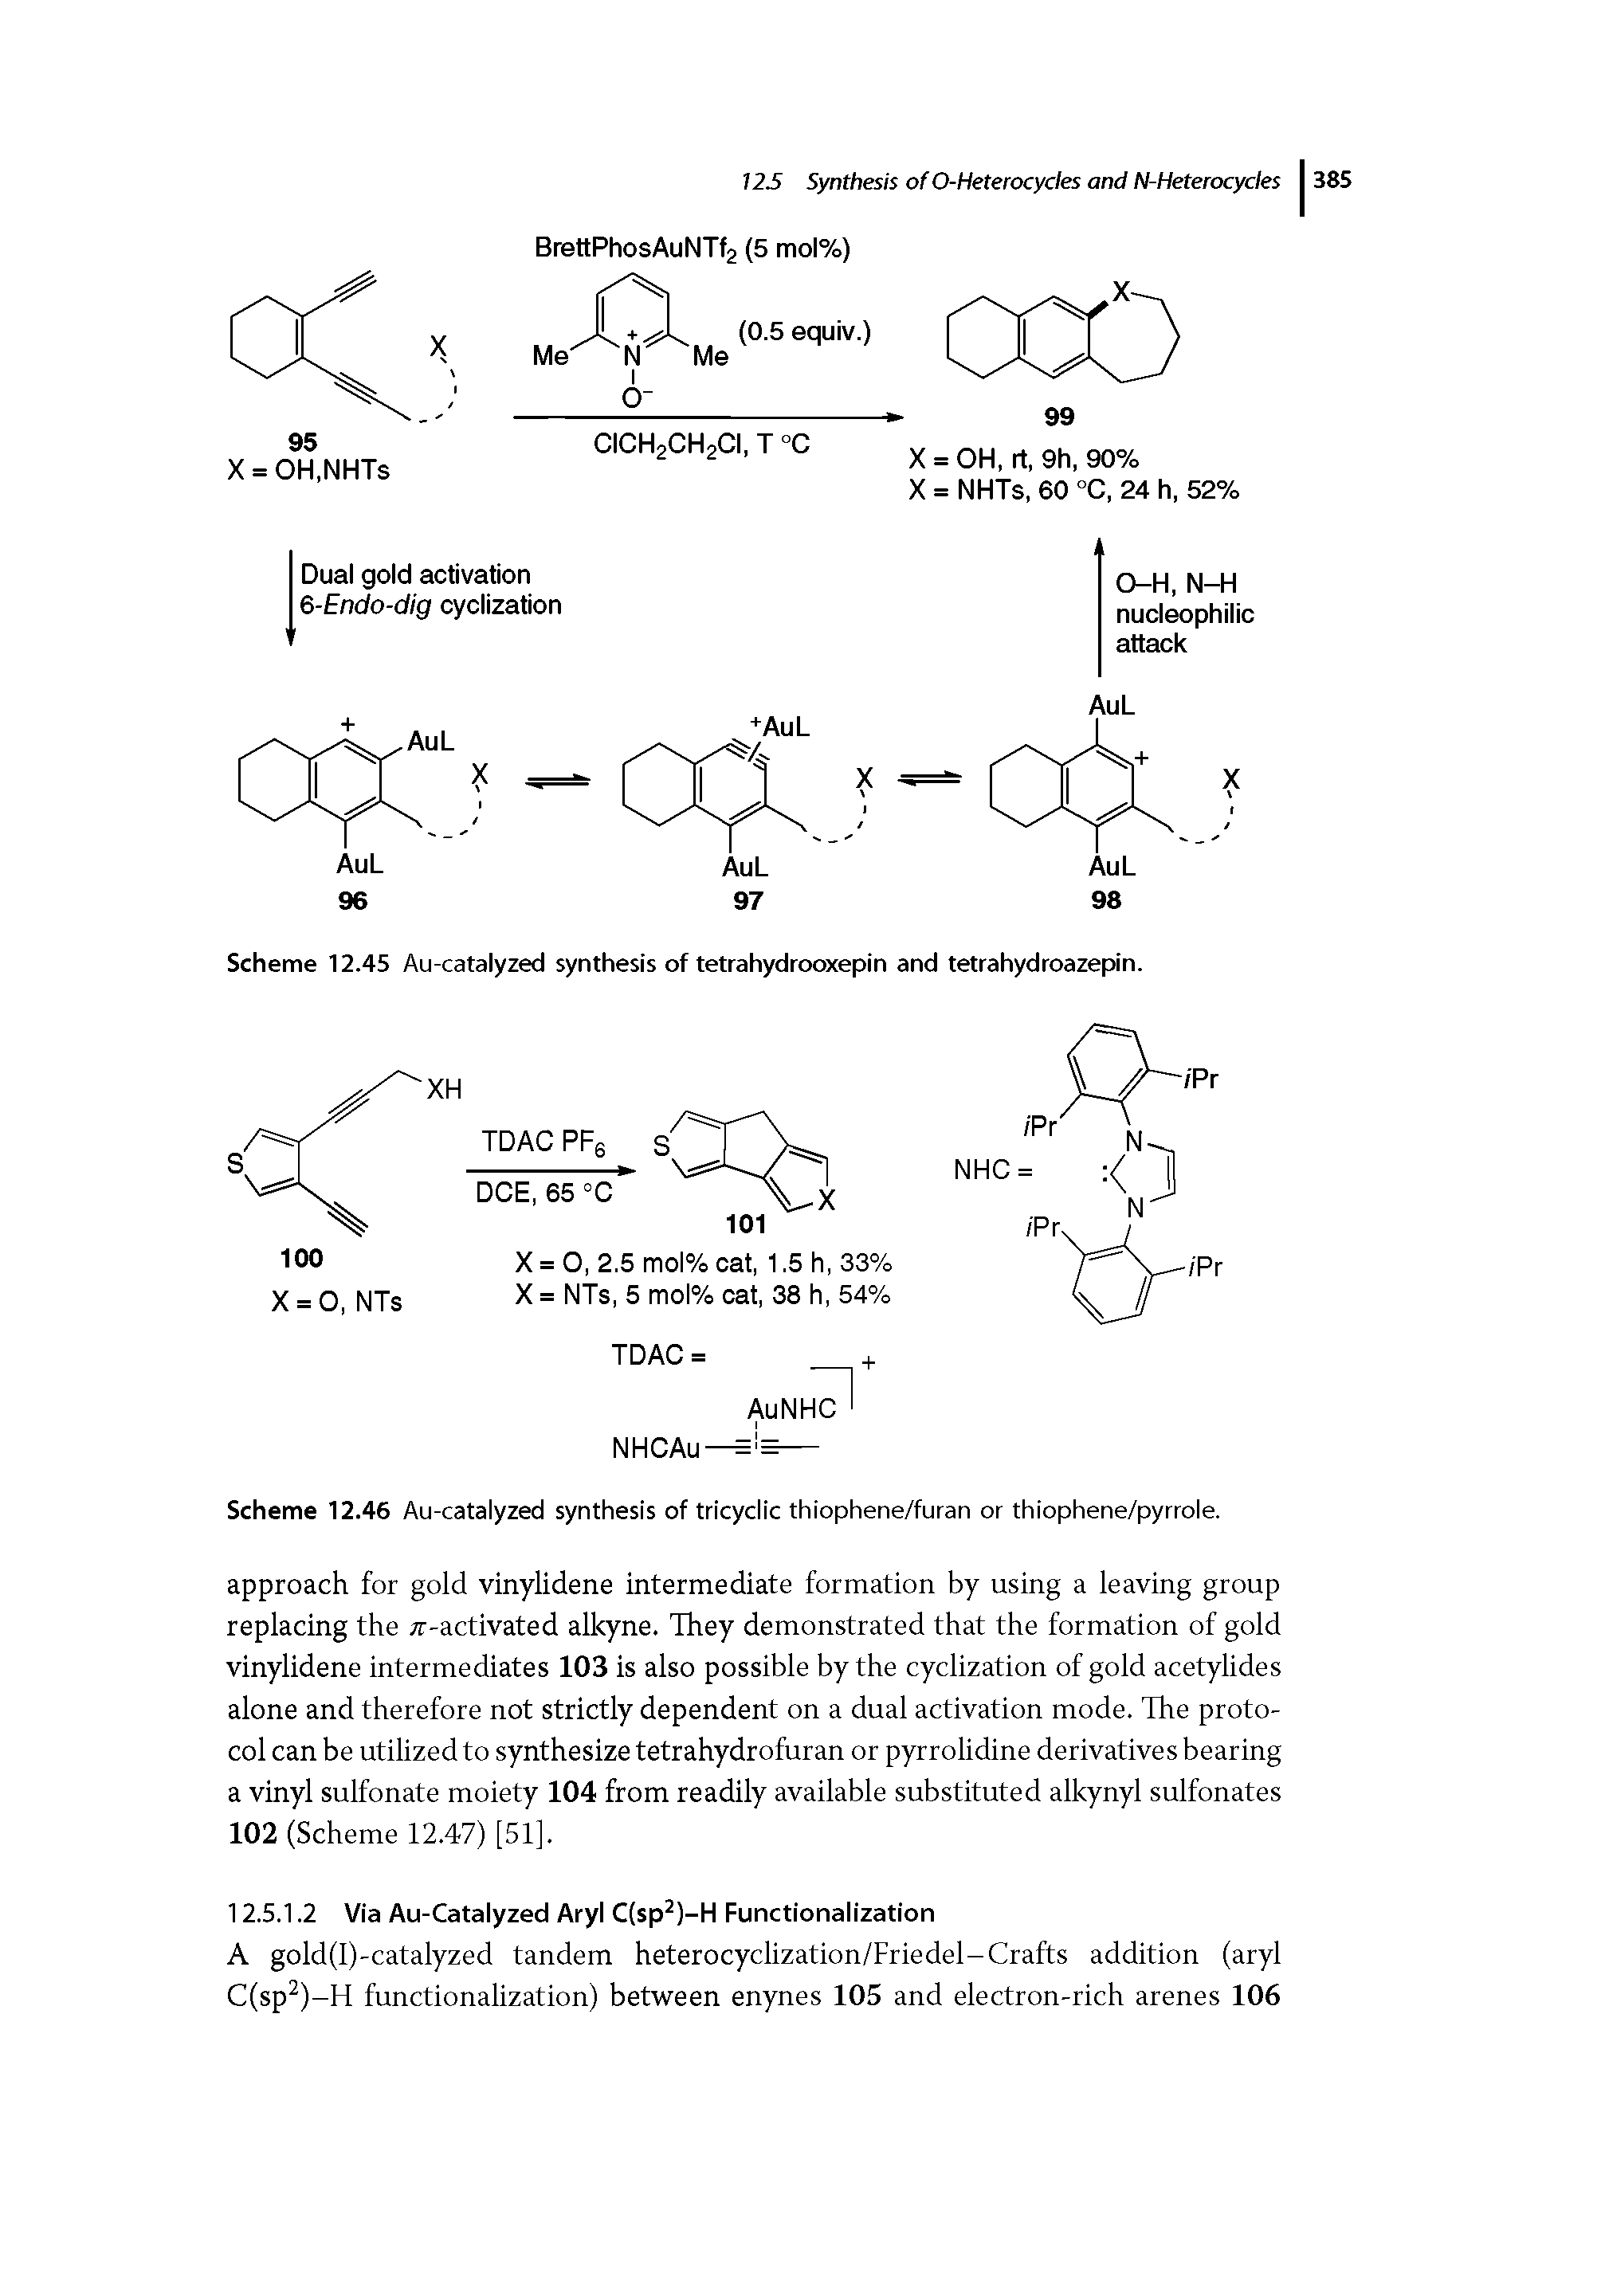 Scheme 12.46 Au-catalyzed synthesis of tricyclic thiophene/furan or thiophene/pyrrole.